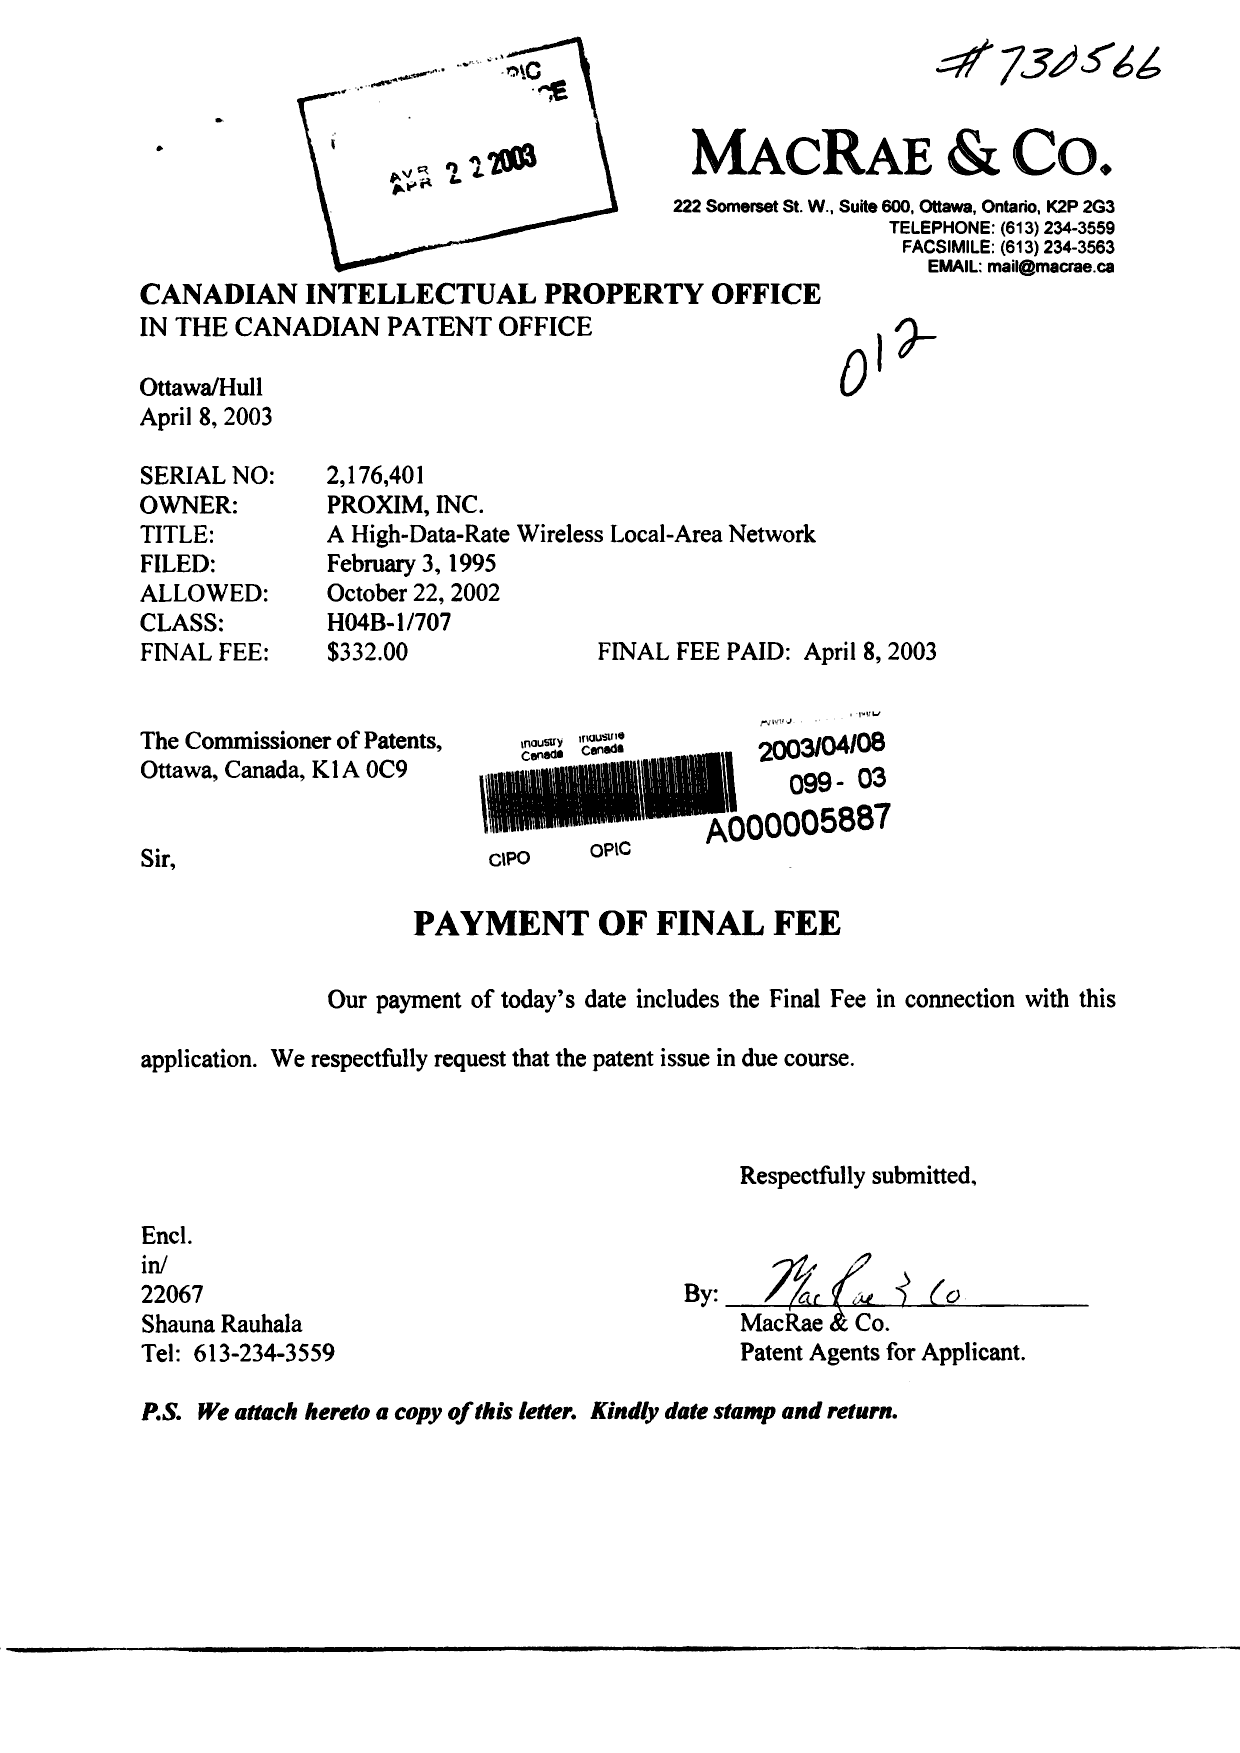 Canadian Patent Document 2176401. Correspondence 20030408. Image 1 of 3